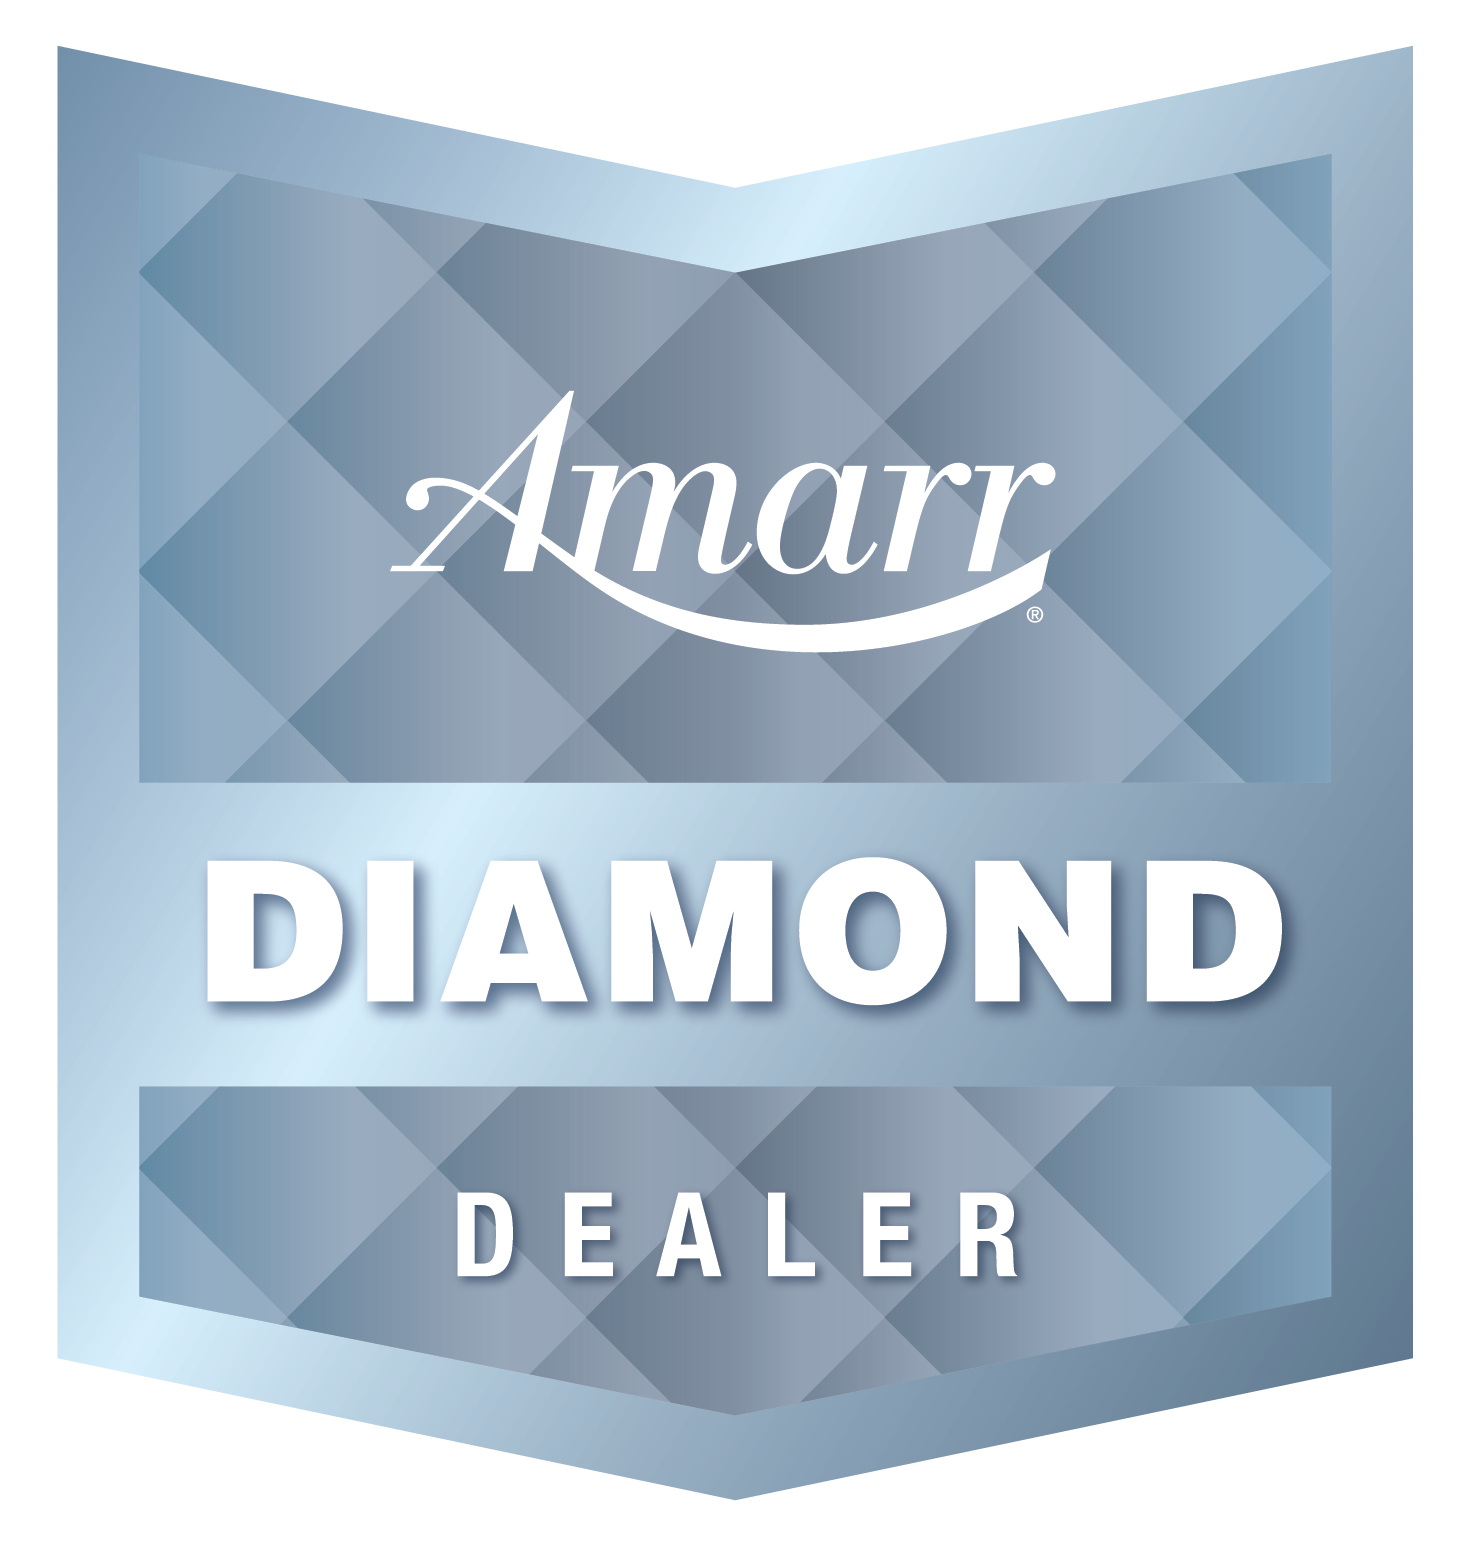 Amarr Diamond Dealer